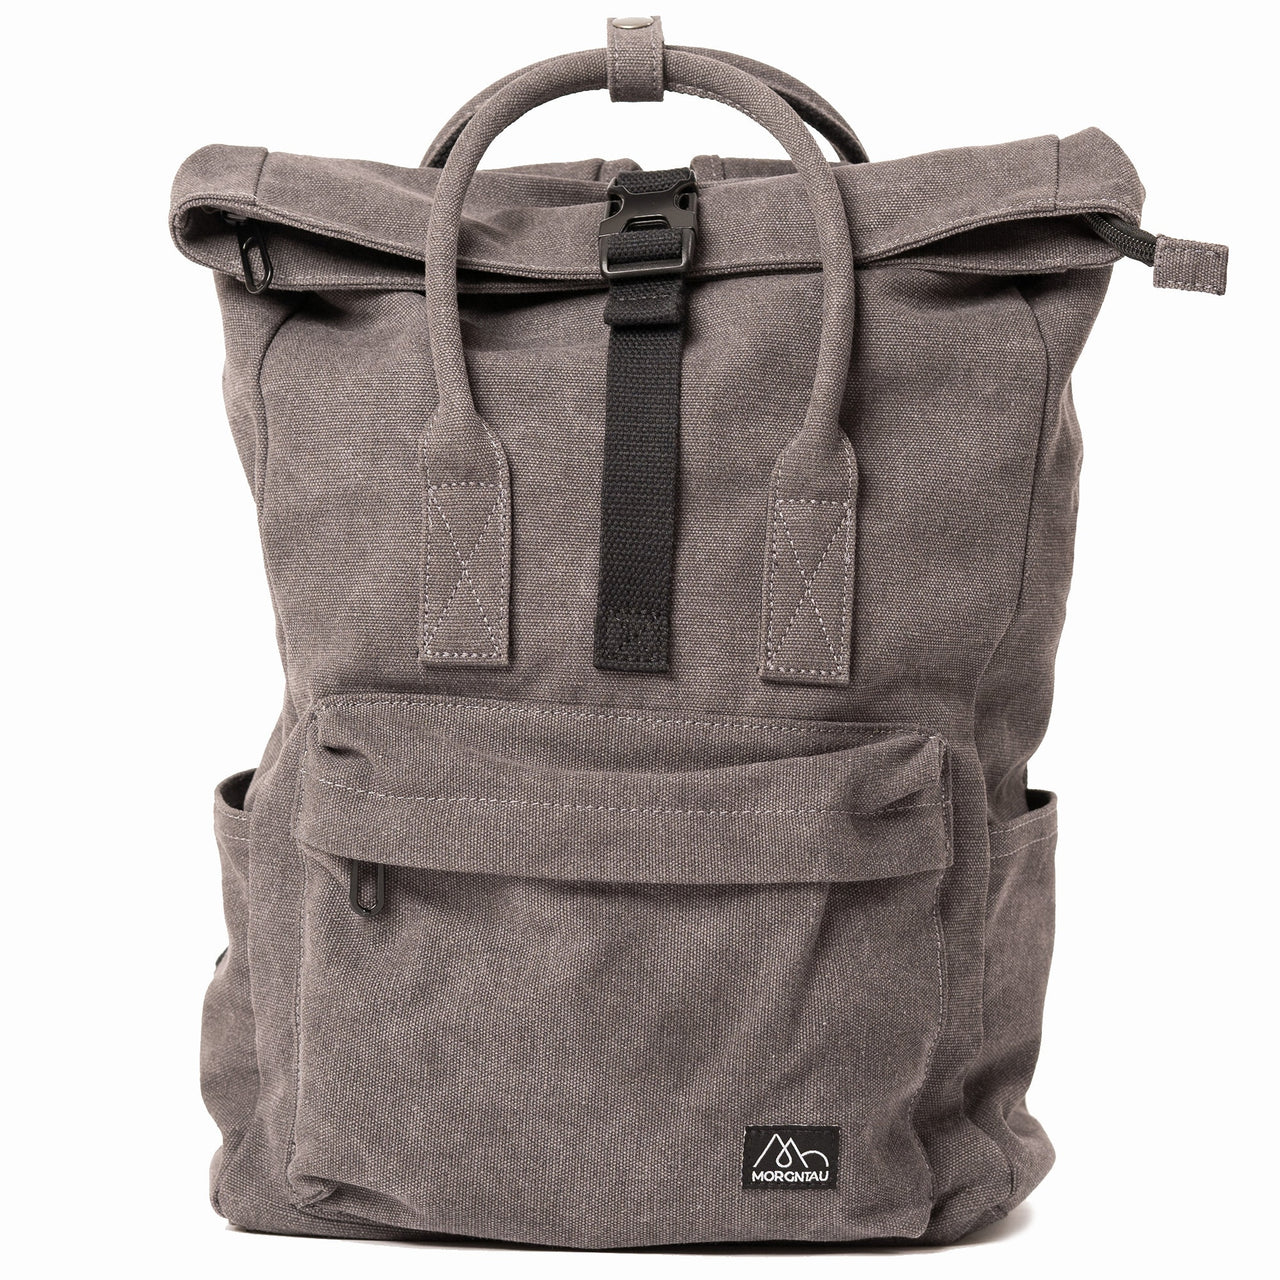 MORGNTAU Canvas Backpack Rolltop "Kolibri", Backpack made by hand, Leisure backpack for women and men, Laptop backpack